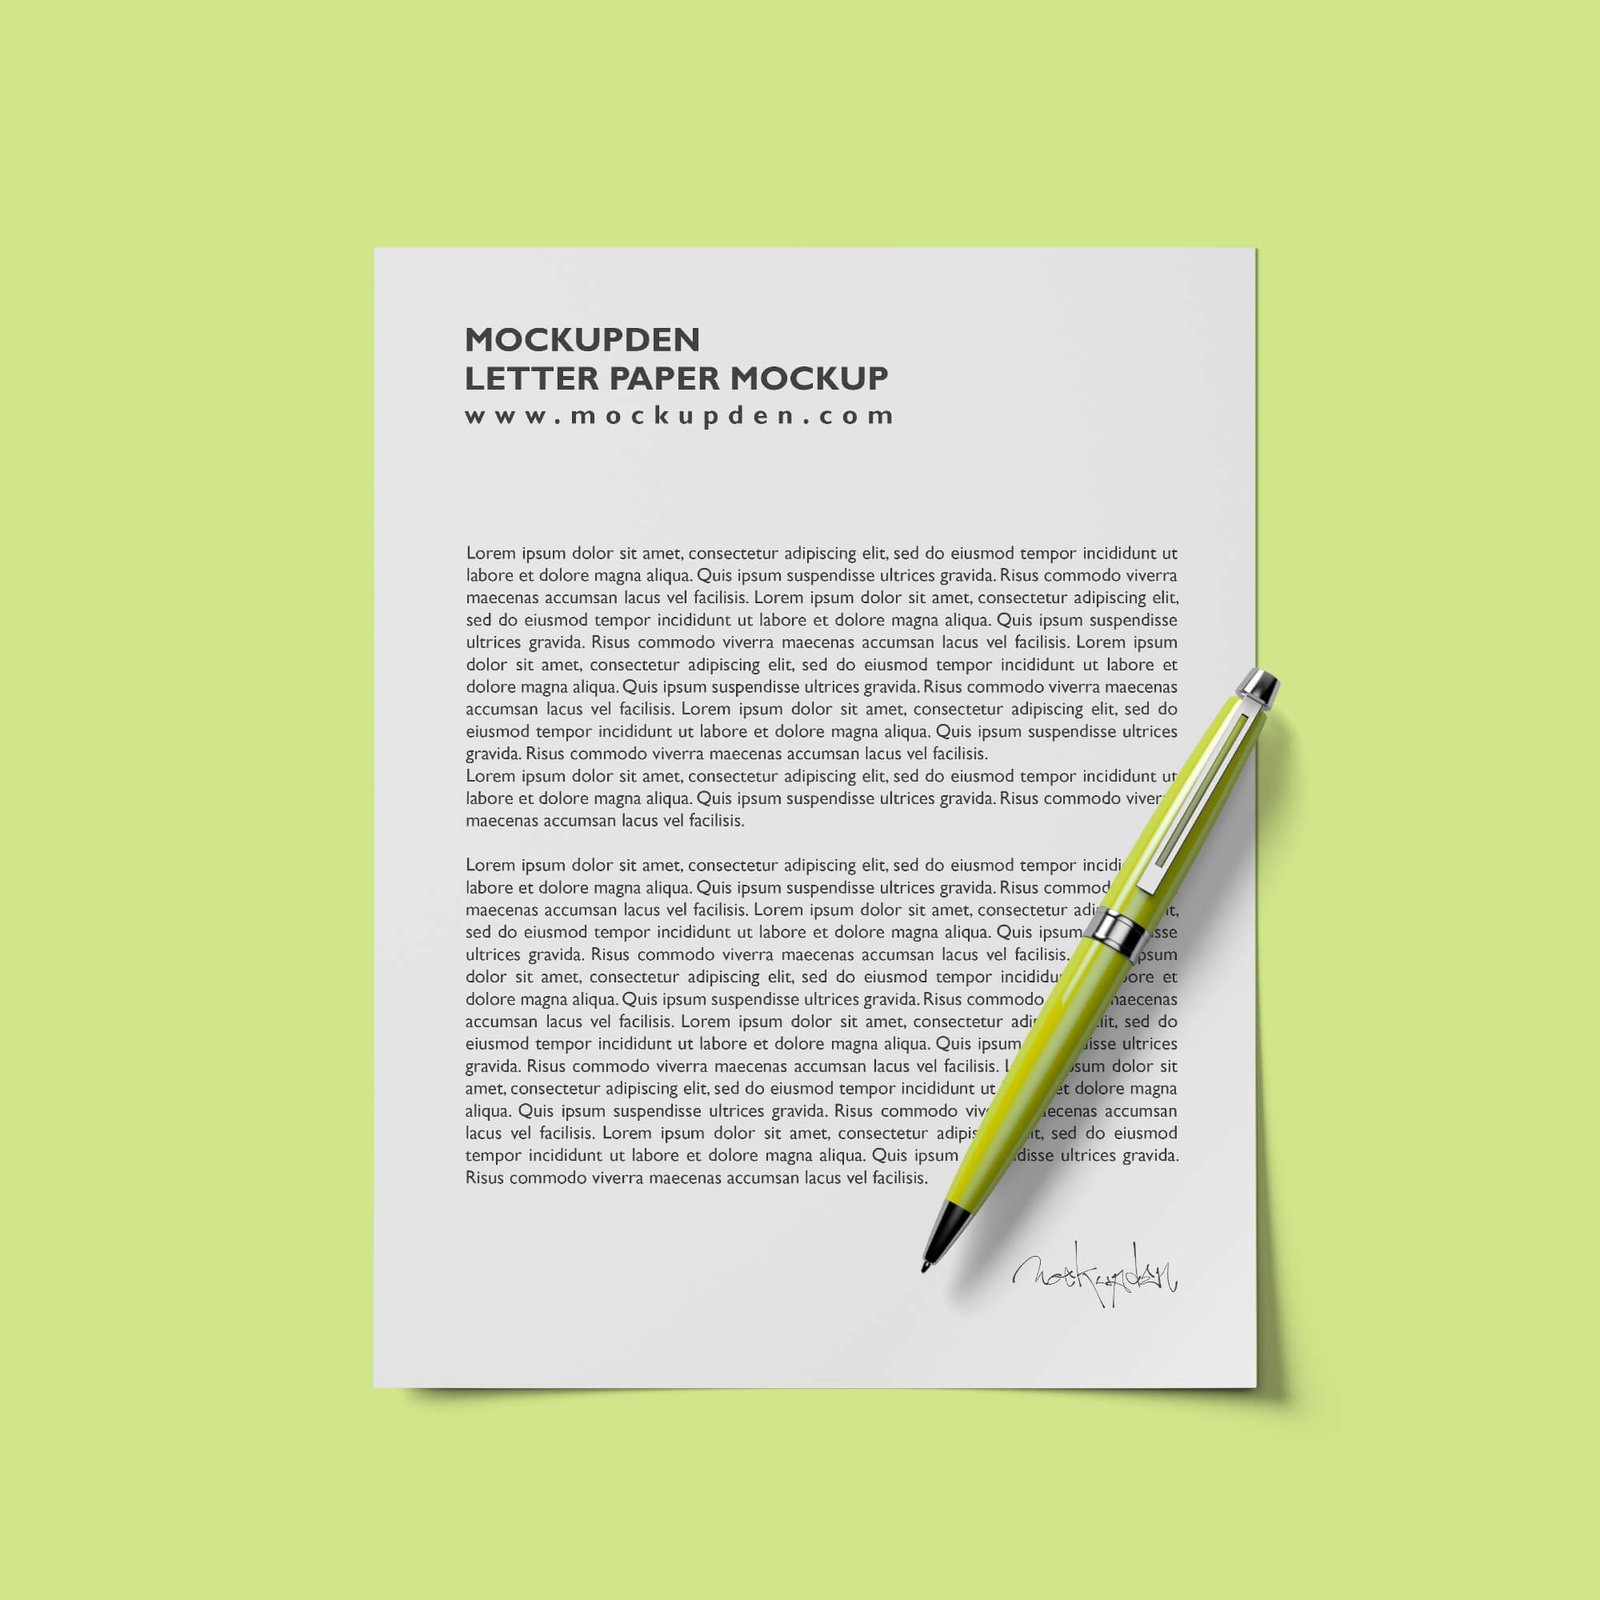 Design Free Letter Paper Mockup PSD Template